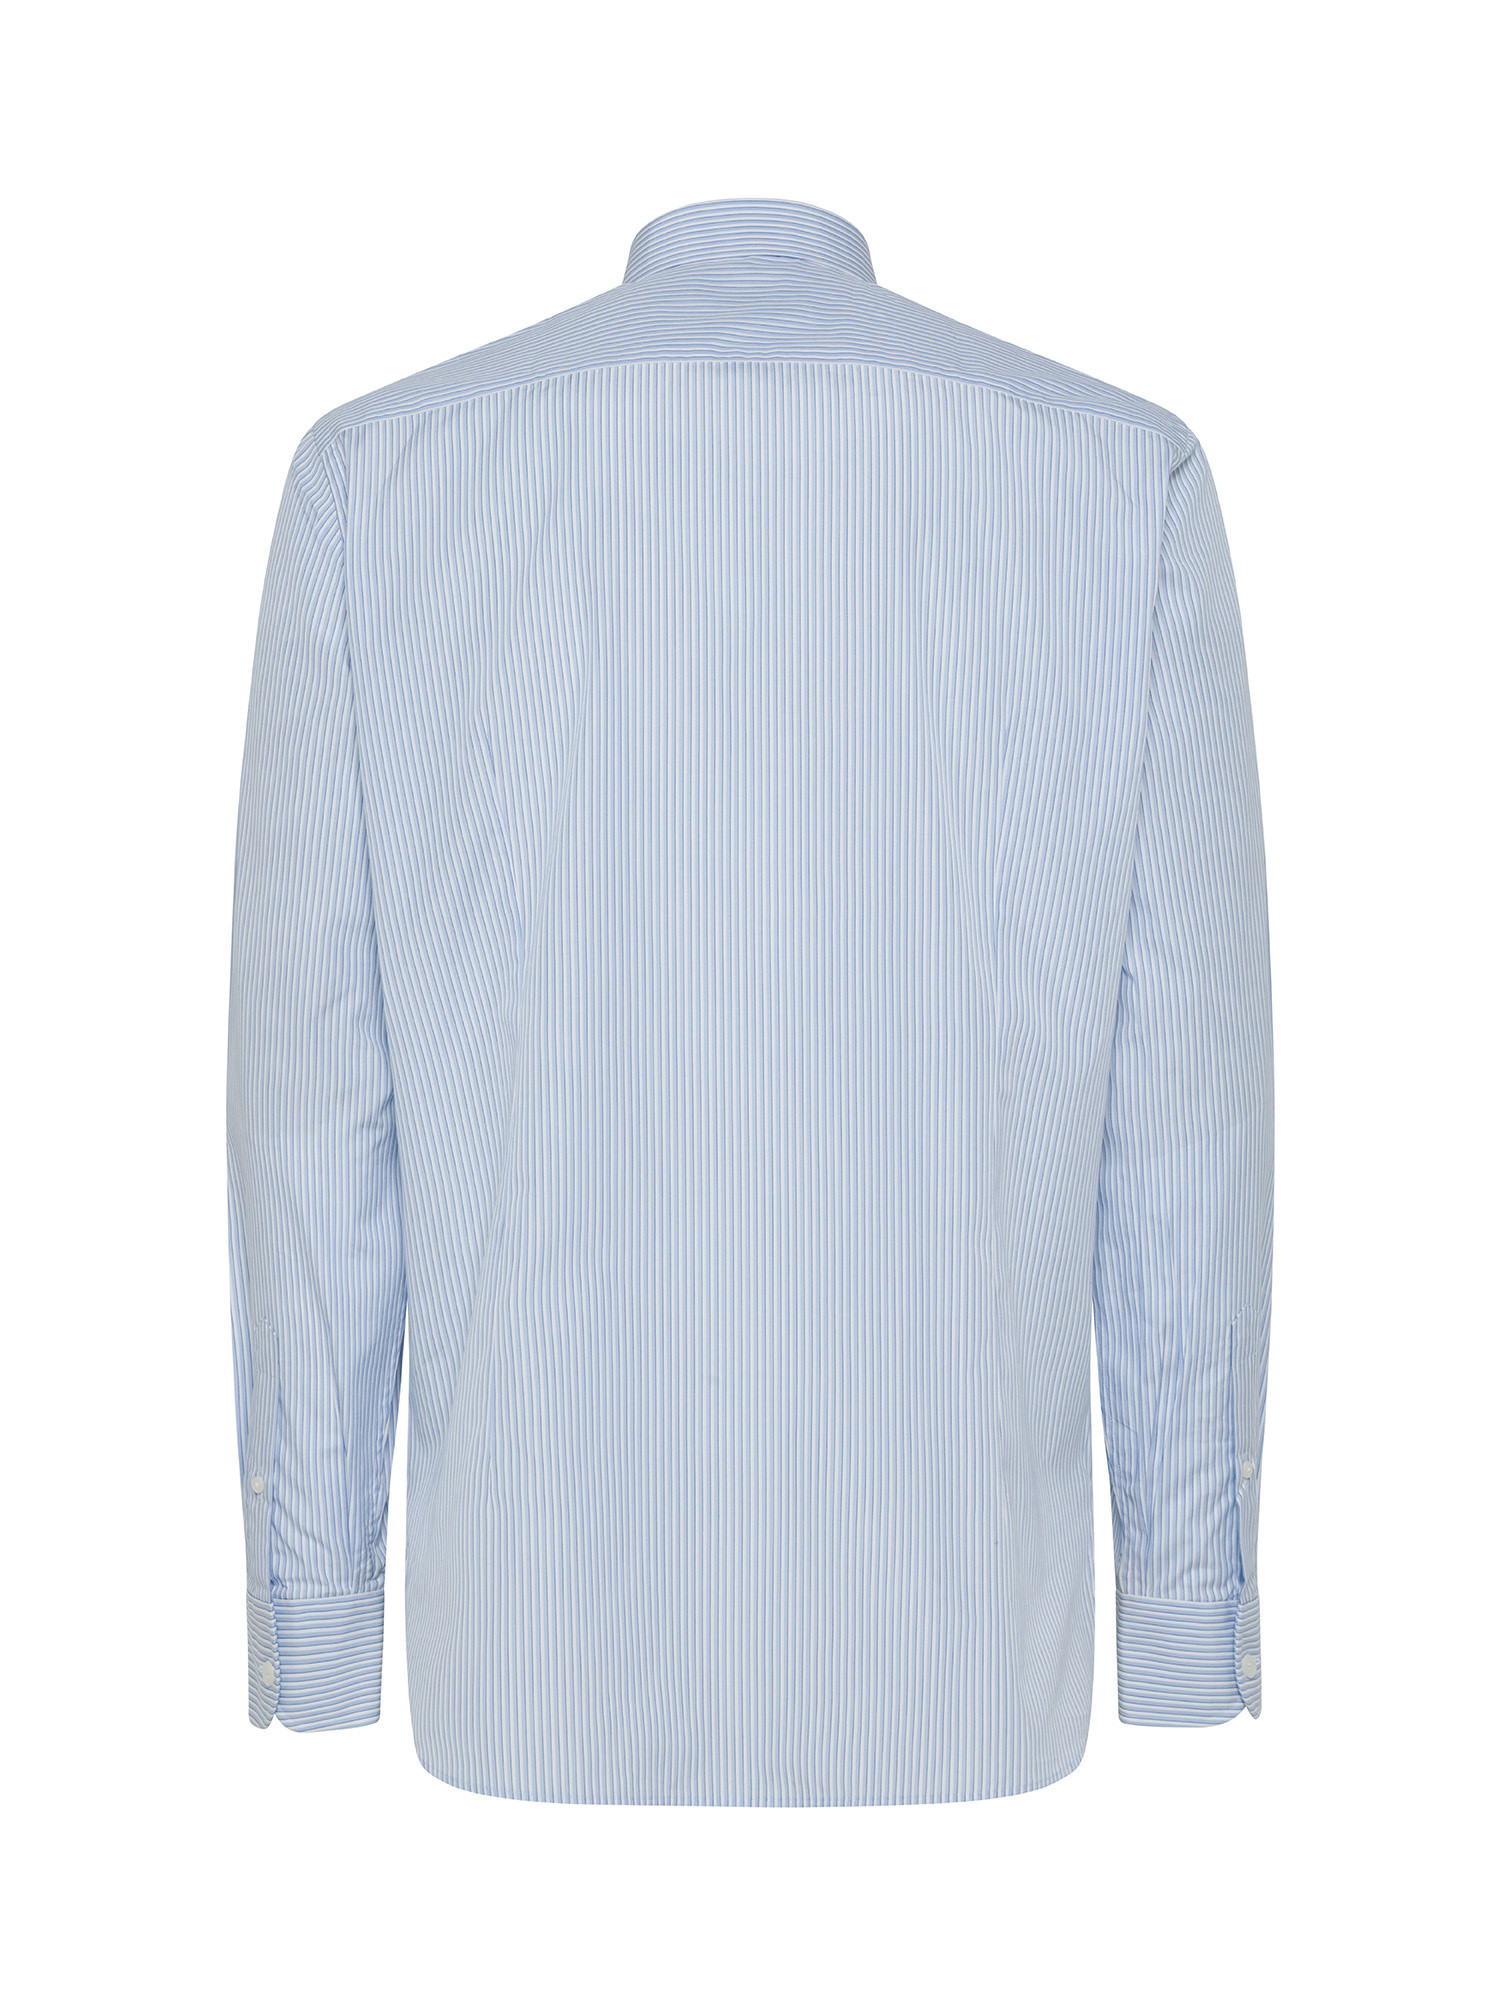 Luca D'Altieri - Camicia slim fit in puro cotone, Azzurro, large image number 1